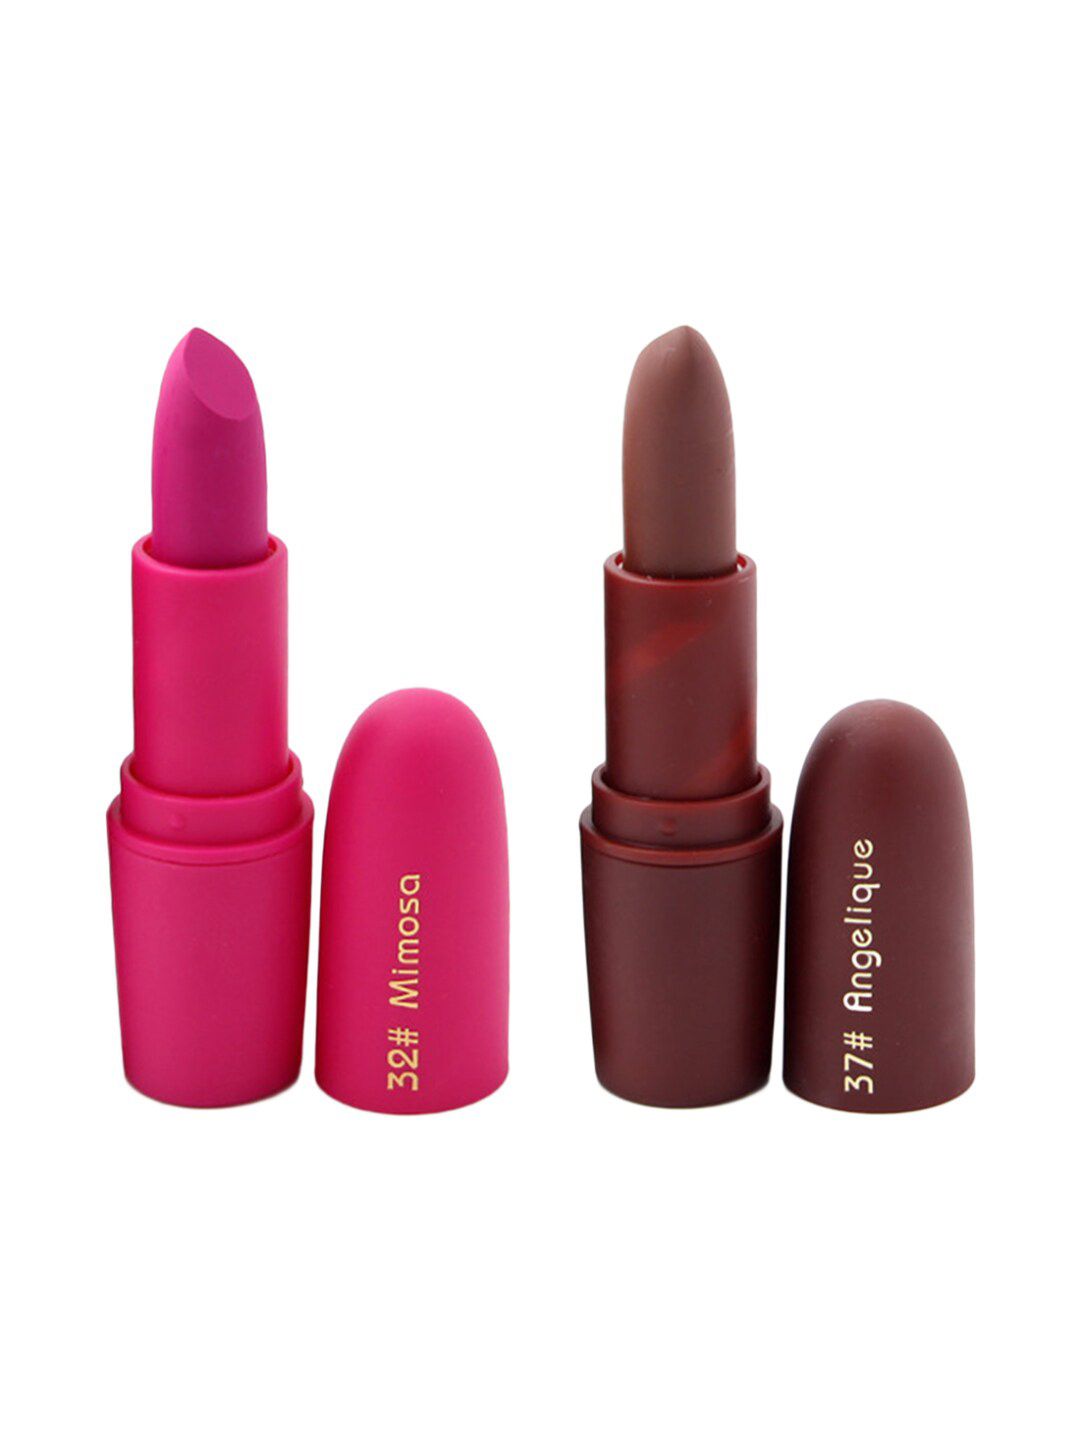 MISS ROSE Set of 2 Matte Creamy Lipsticks - Mimosa 32 & Angelique 37 Price in India